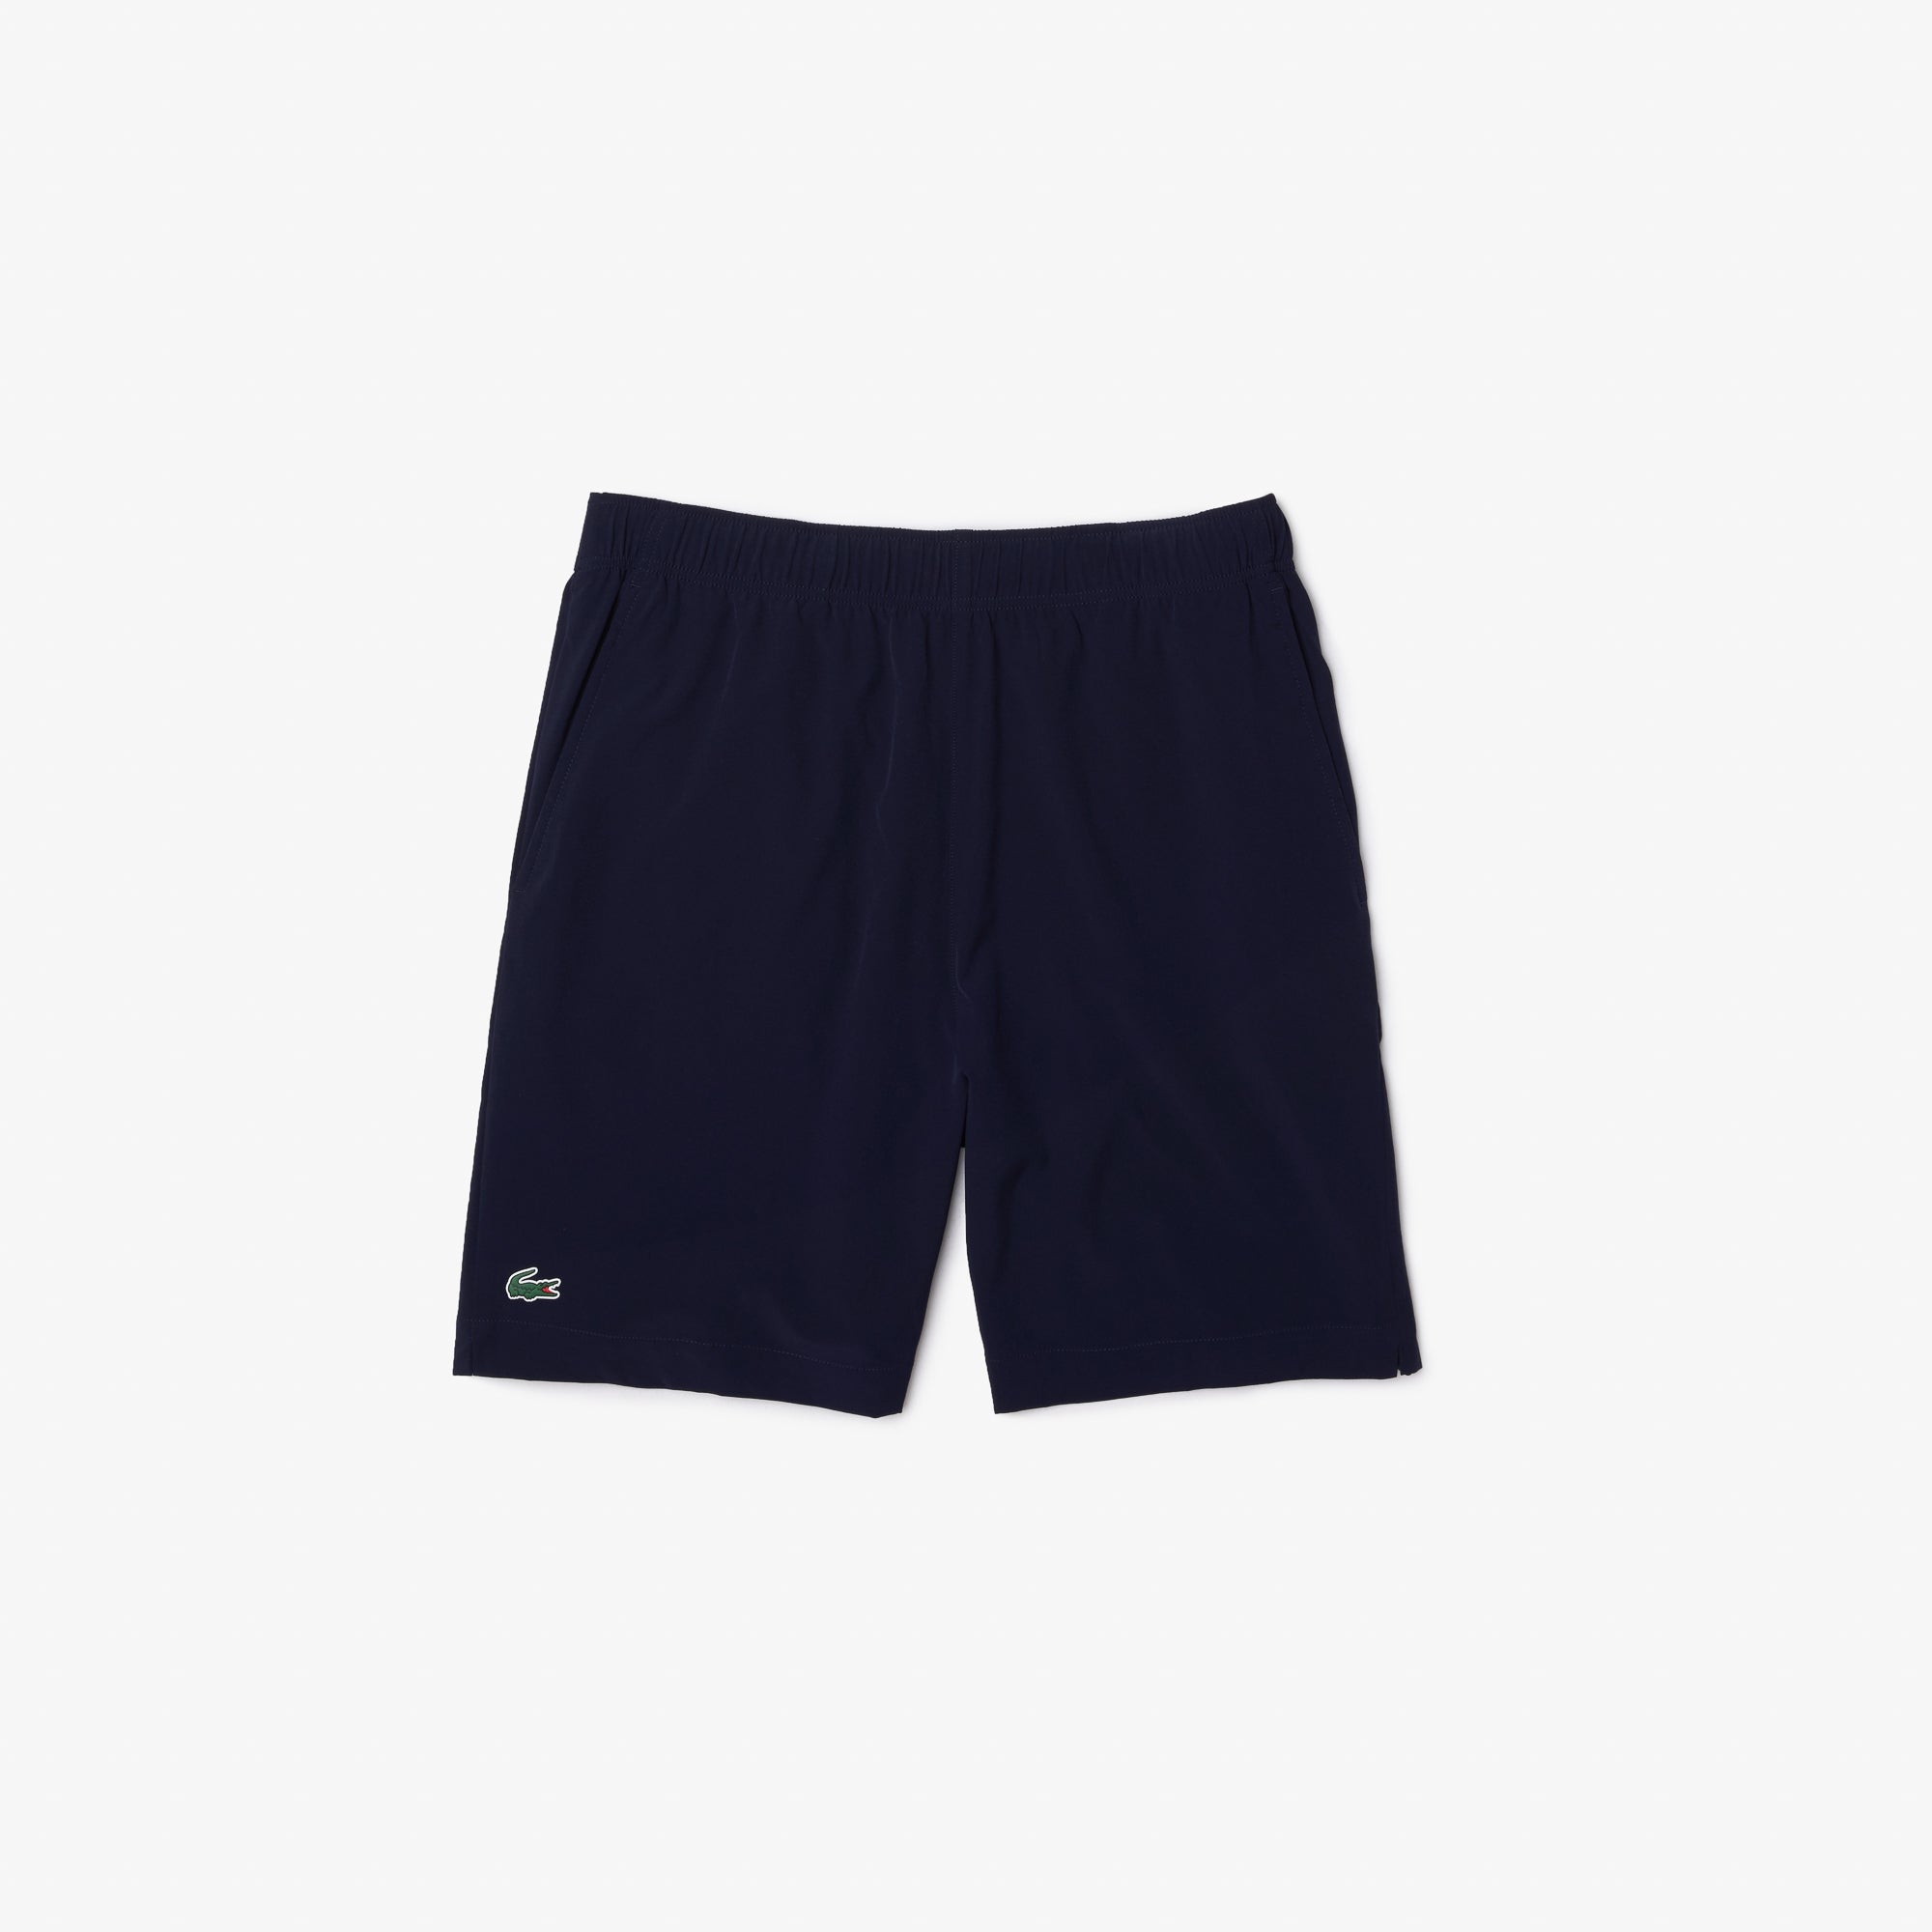 Lacoste Shorts (Navy) - XL